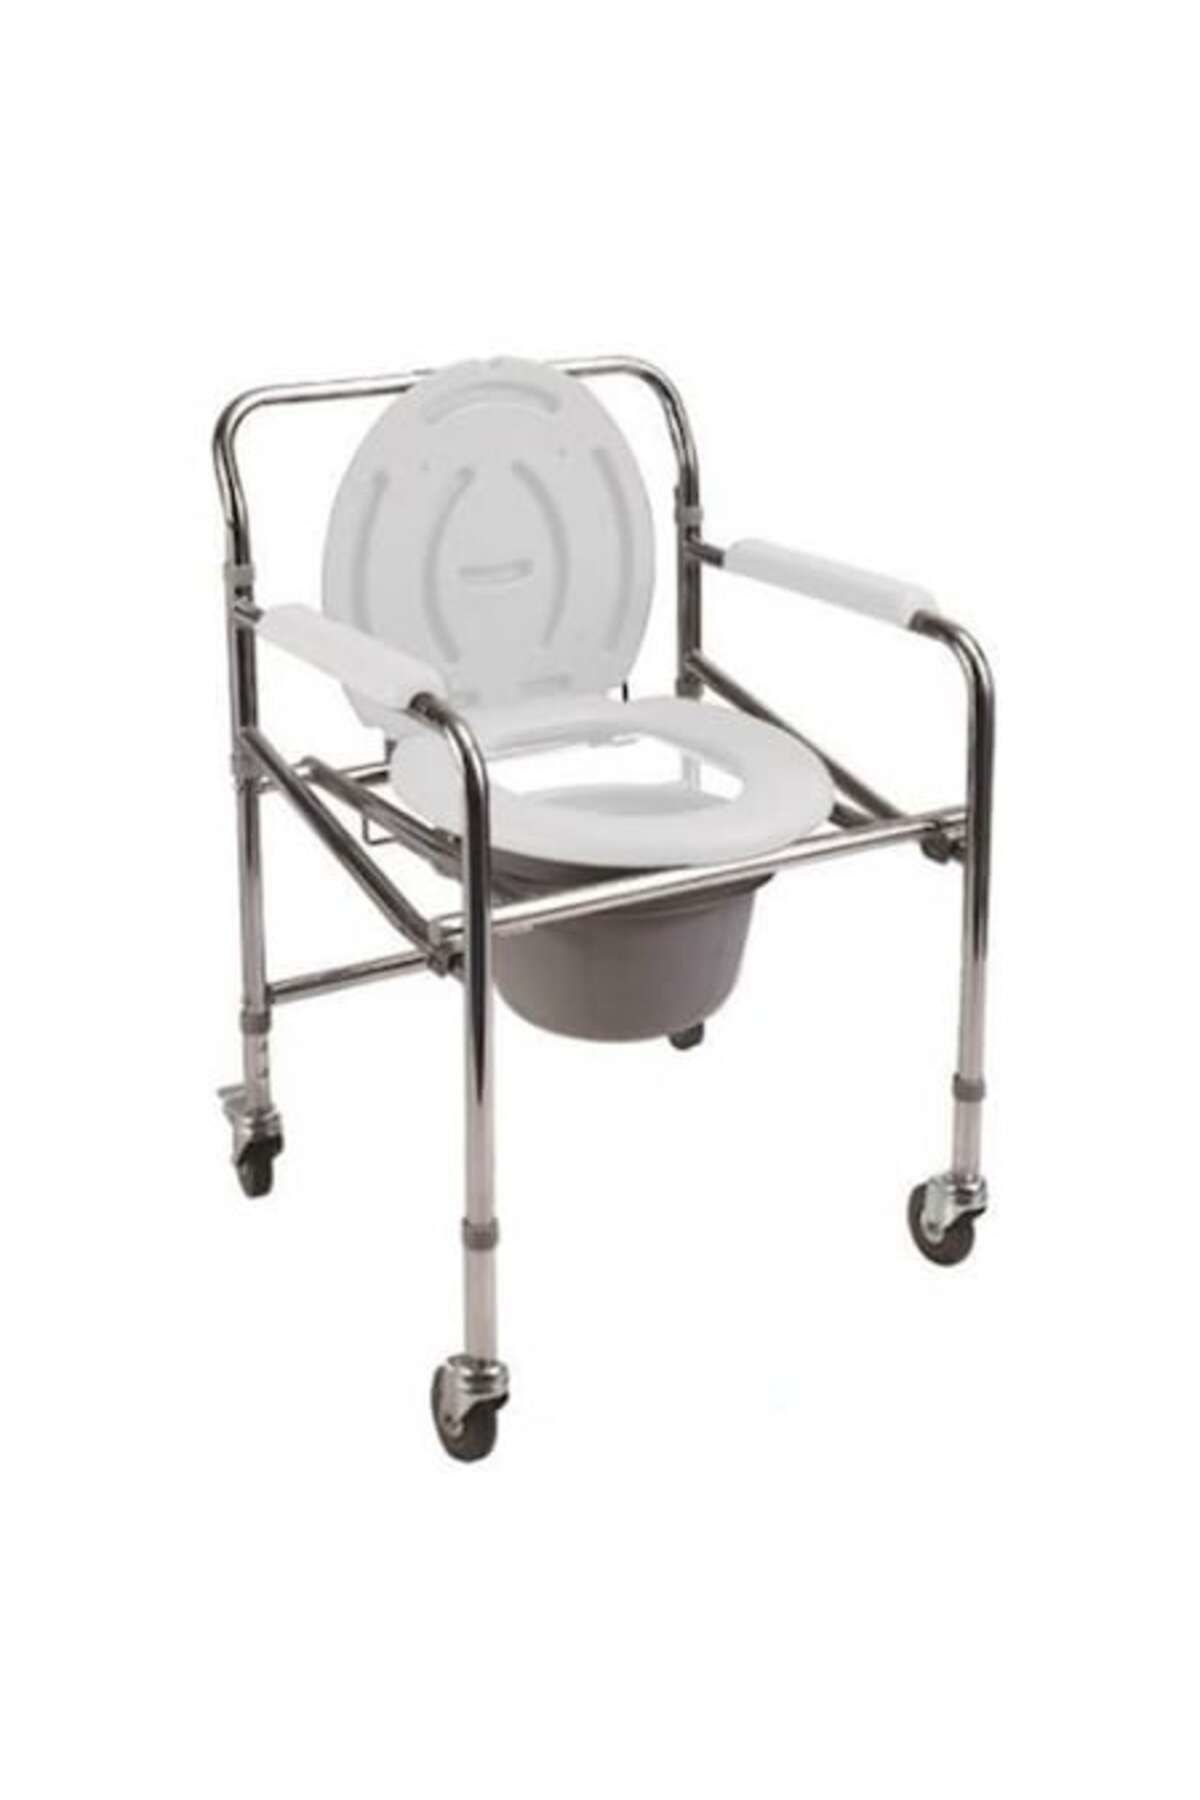 DM-311 Tuvaletli Tekerlekli Sandalye